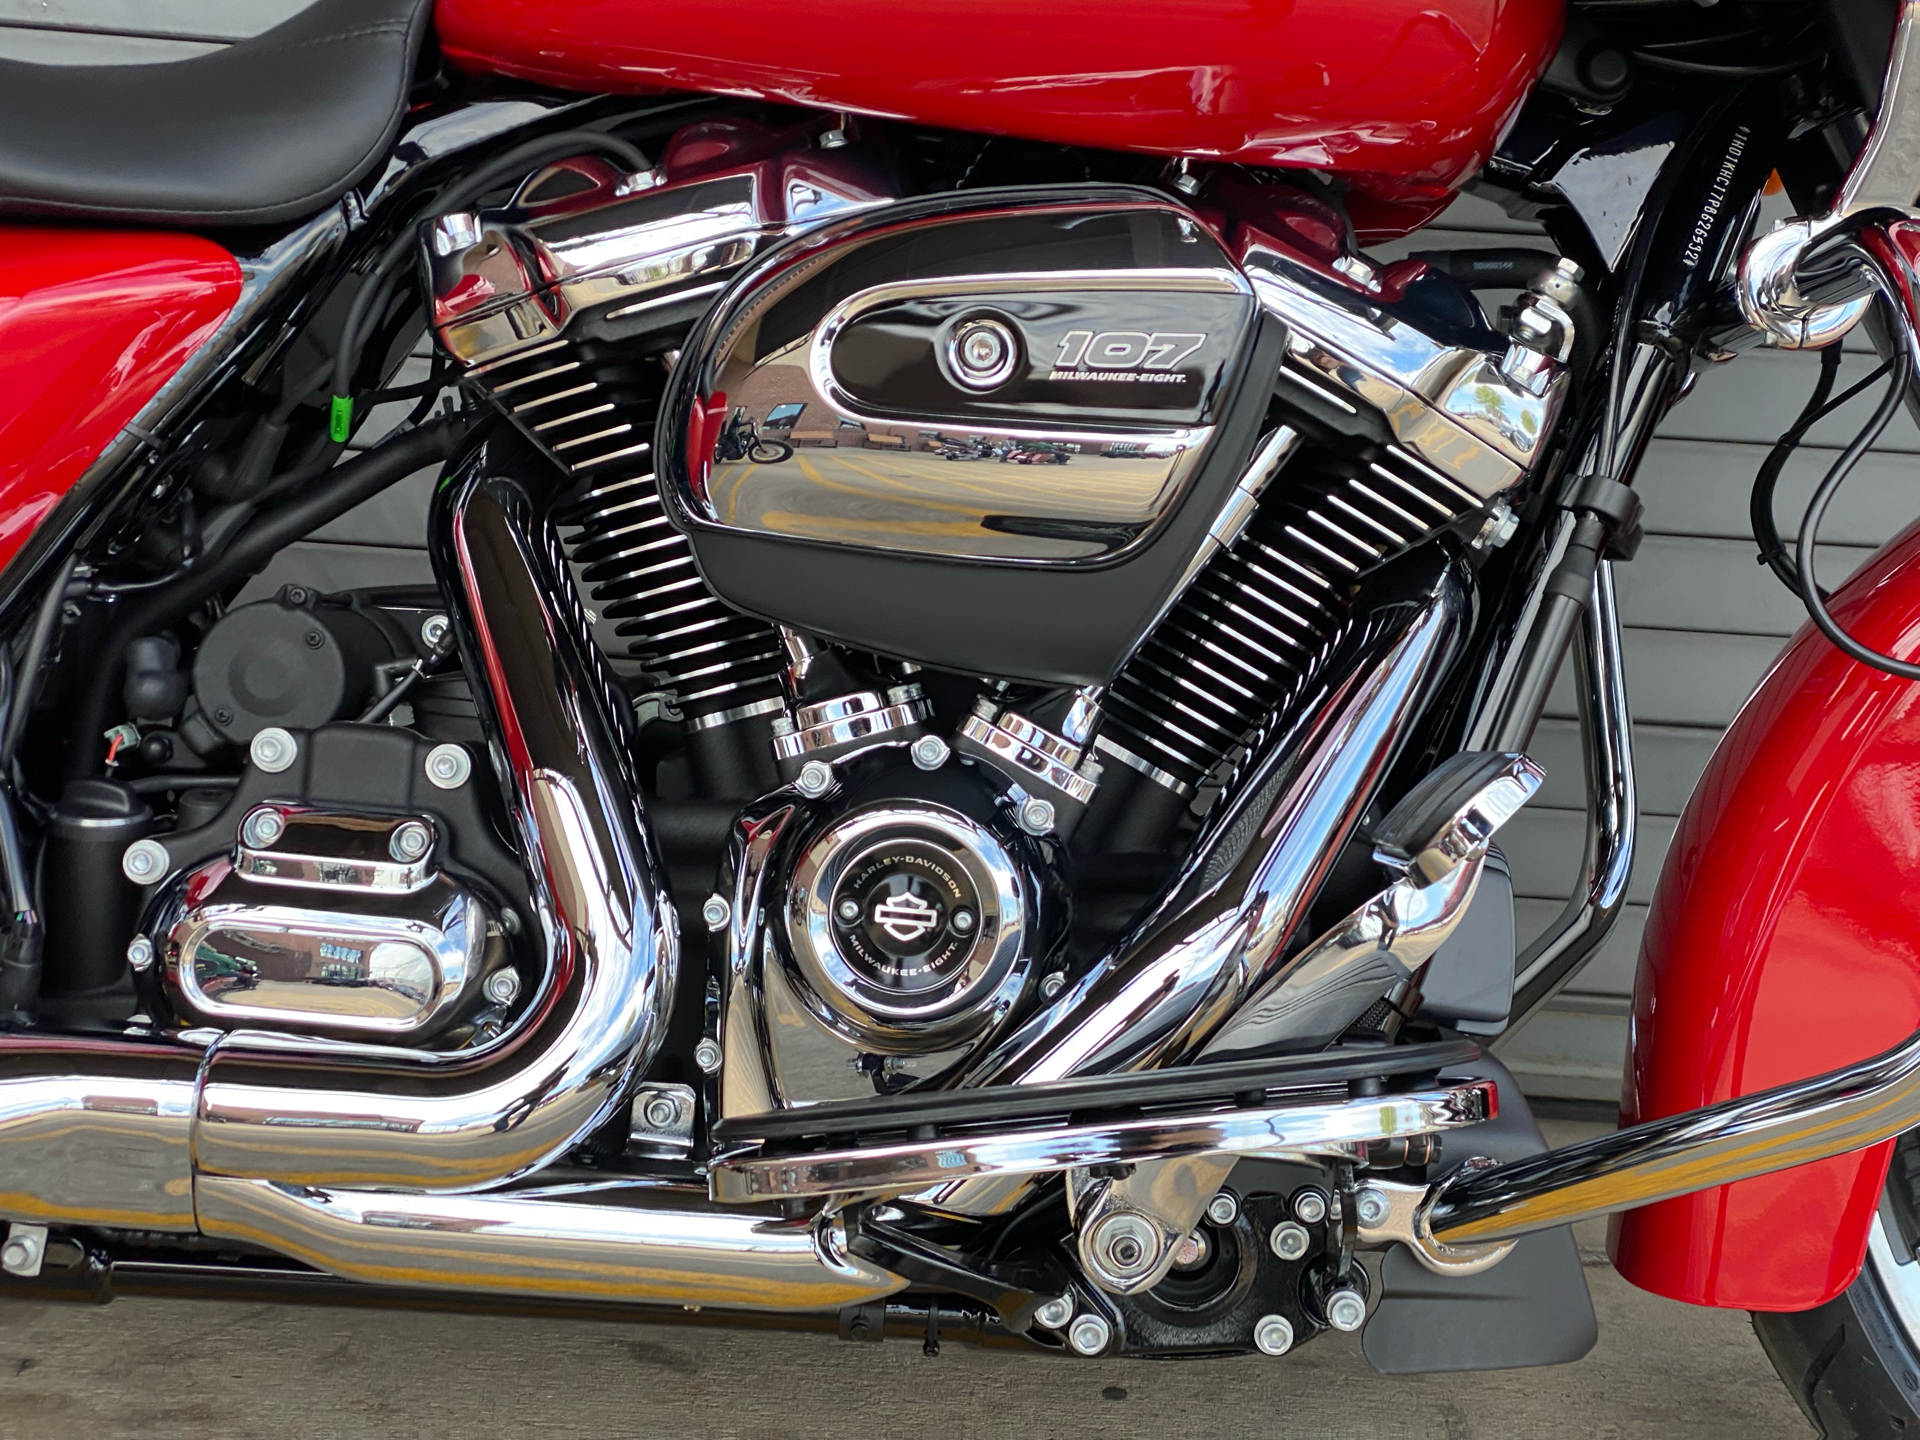 2023 Harley-Davidson Road Glide® in Carrollton, Texas - Photo 6